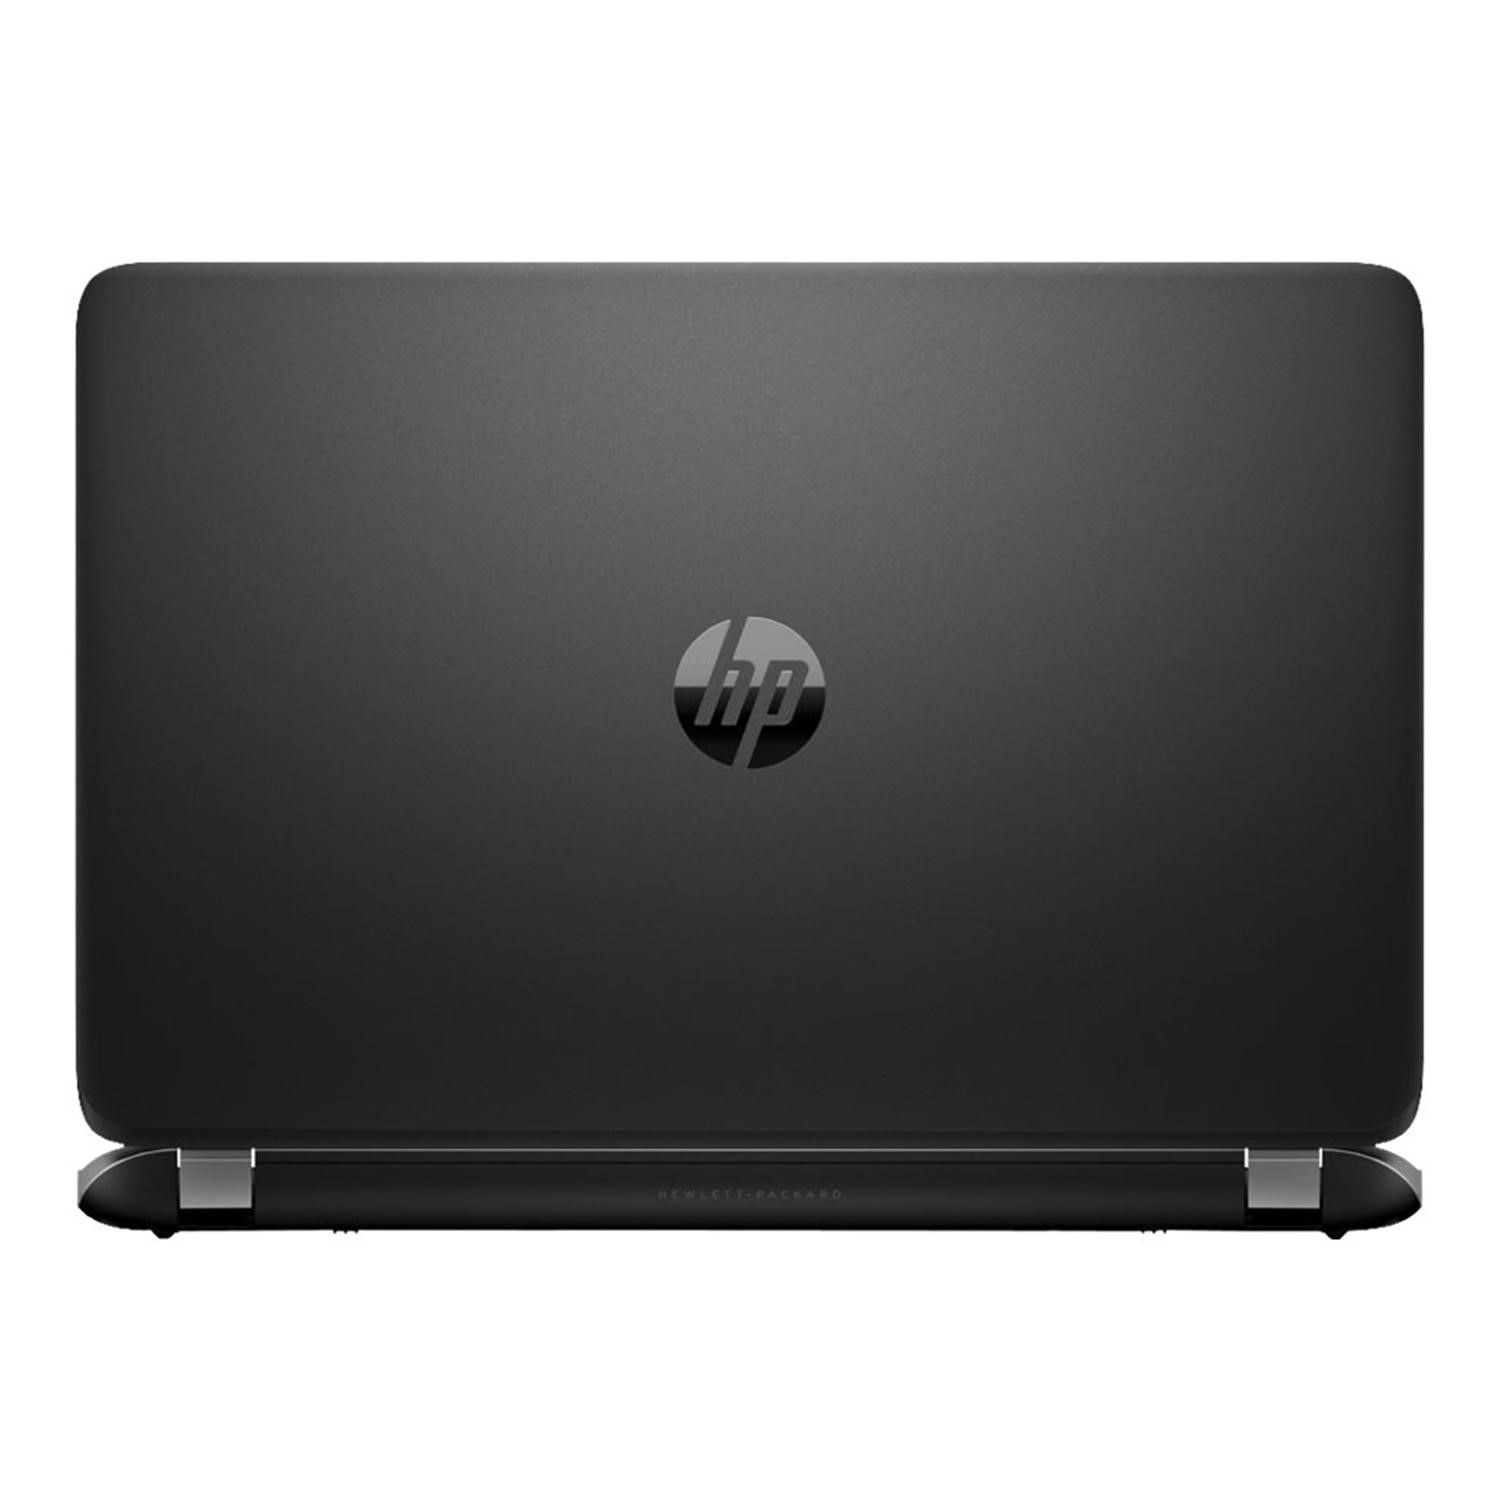 HP ProBook 455 G2 Quad Core AMD A8-7100 1.8GHz 4GB 500GB DVDSM 15.6